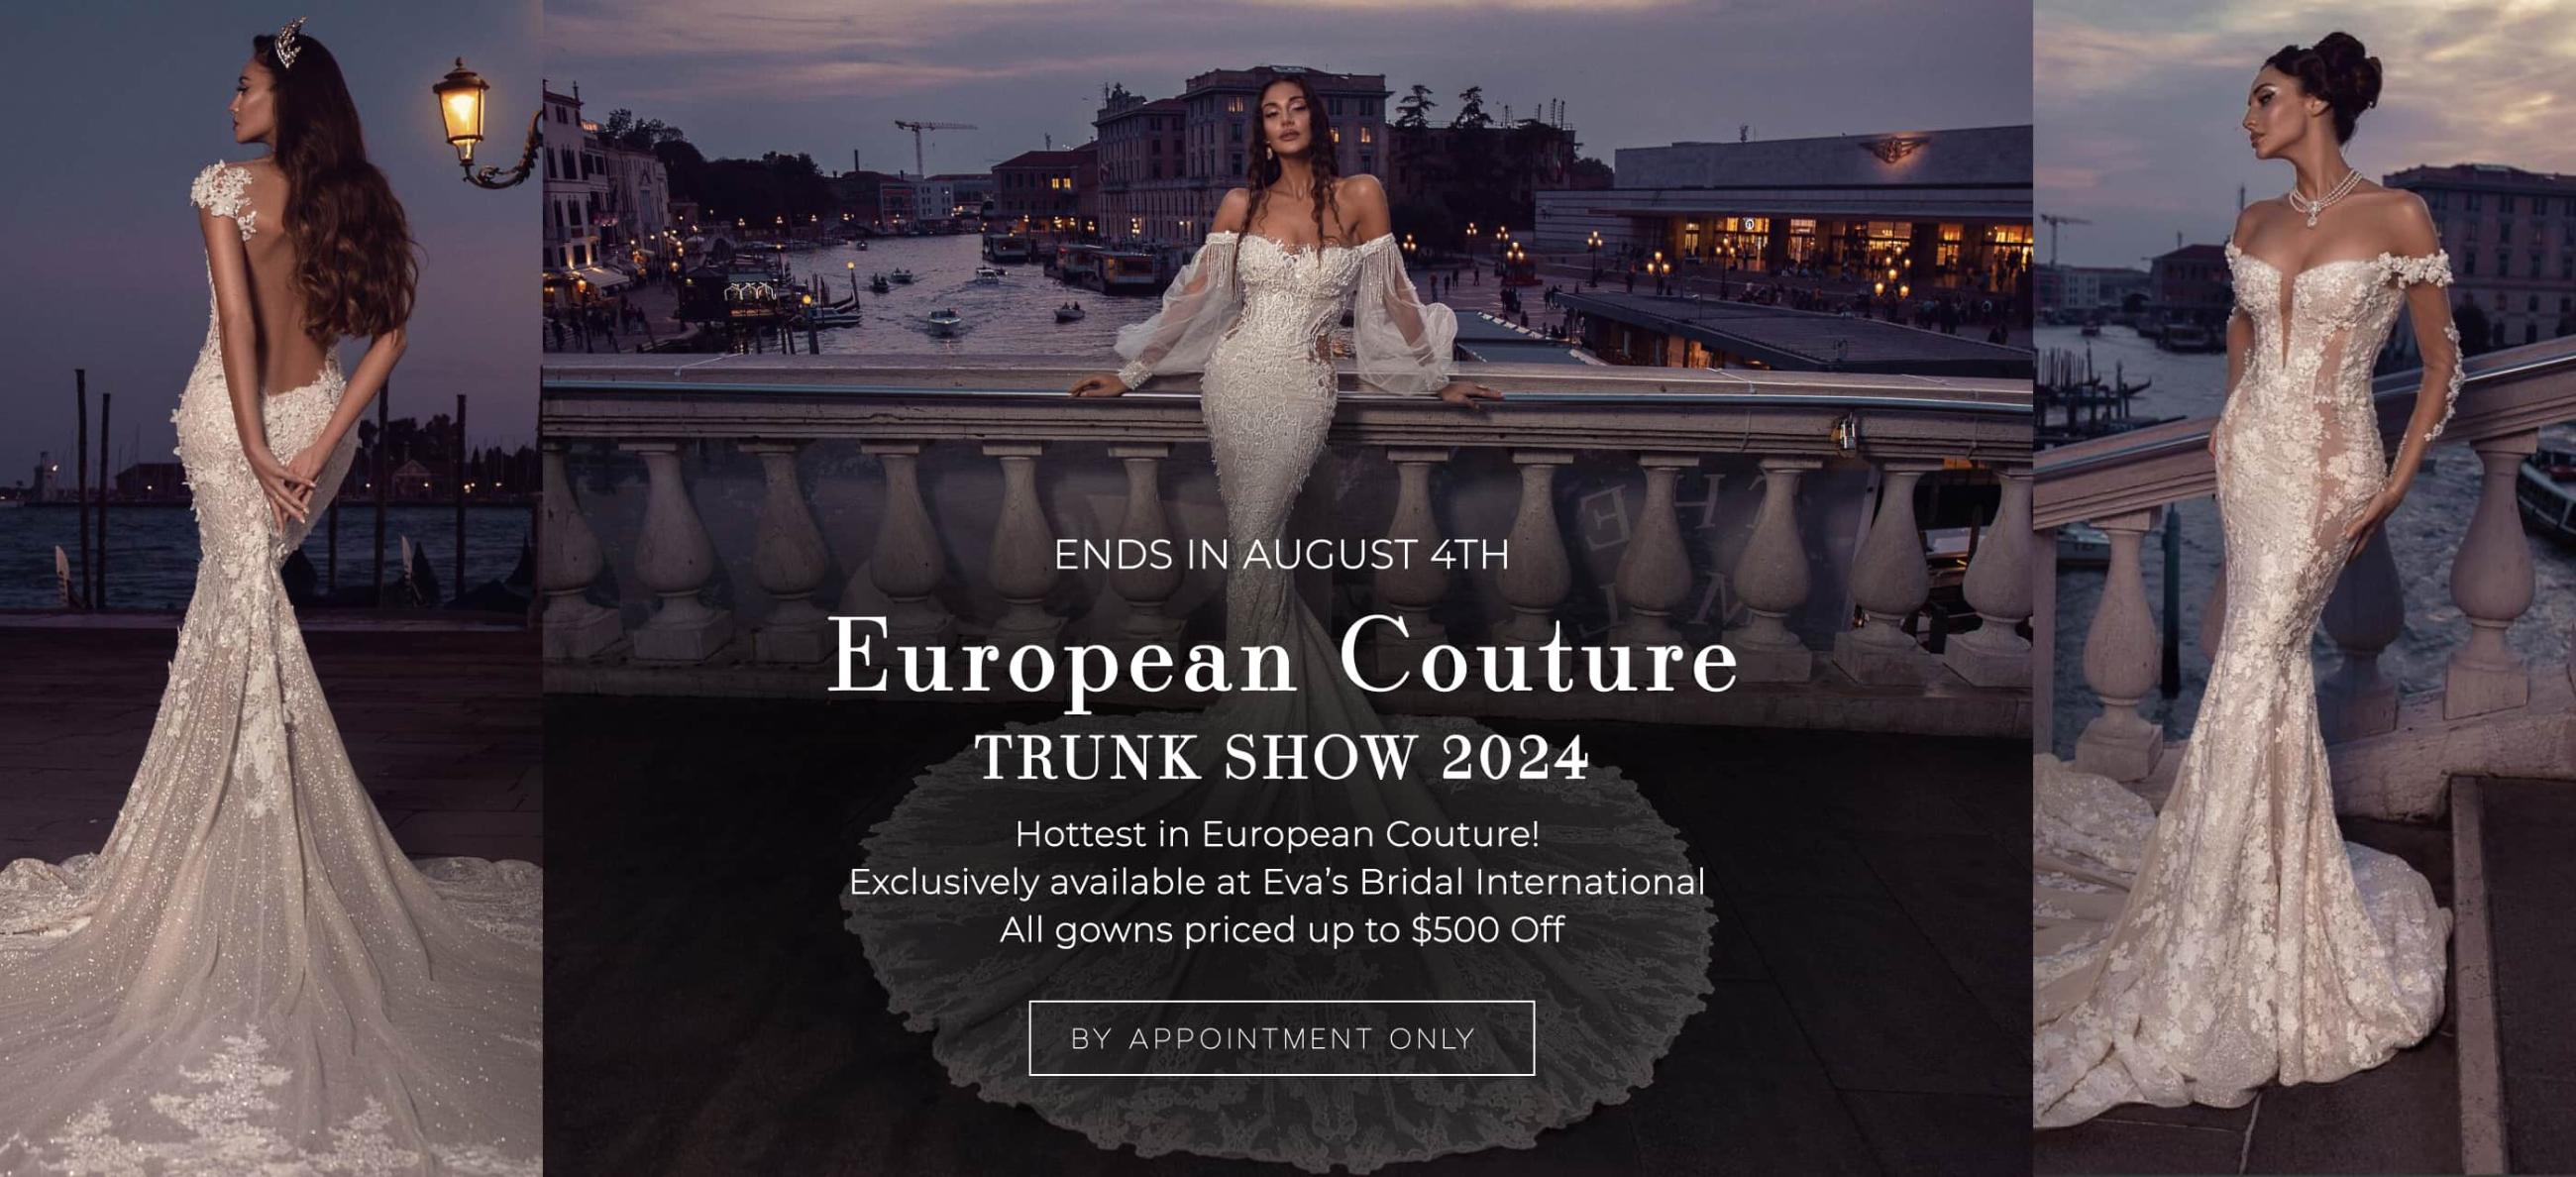 European Couture Trunk Show 2024 banner for desktop